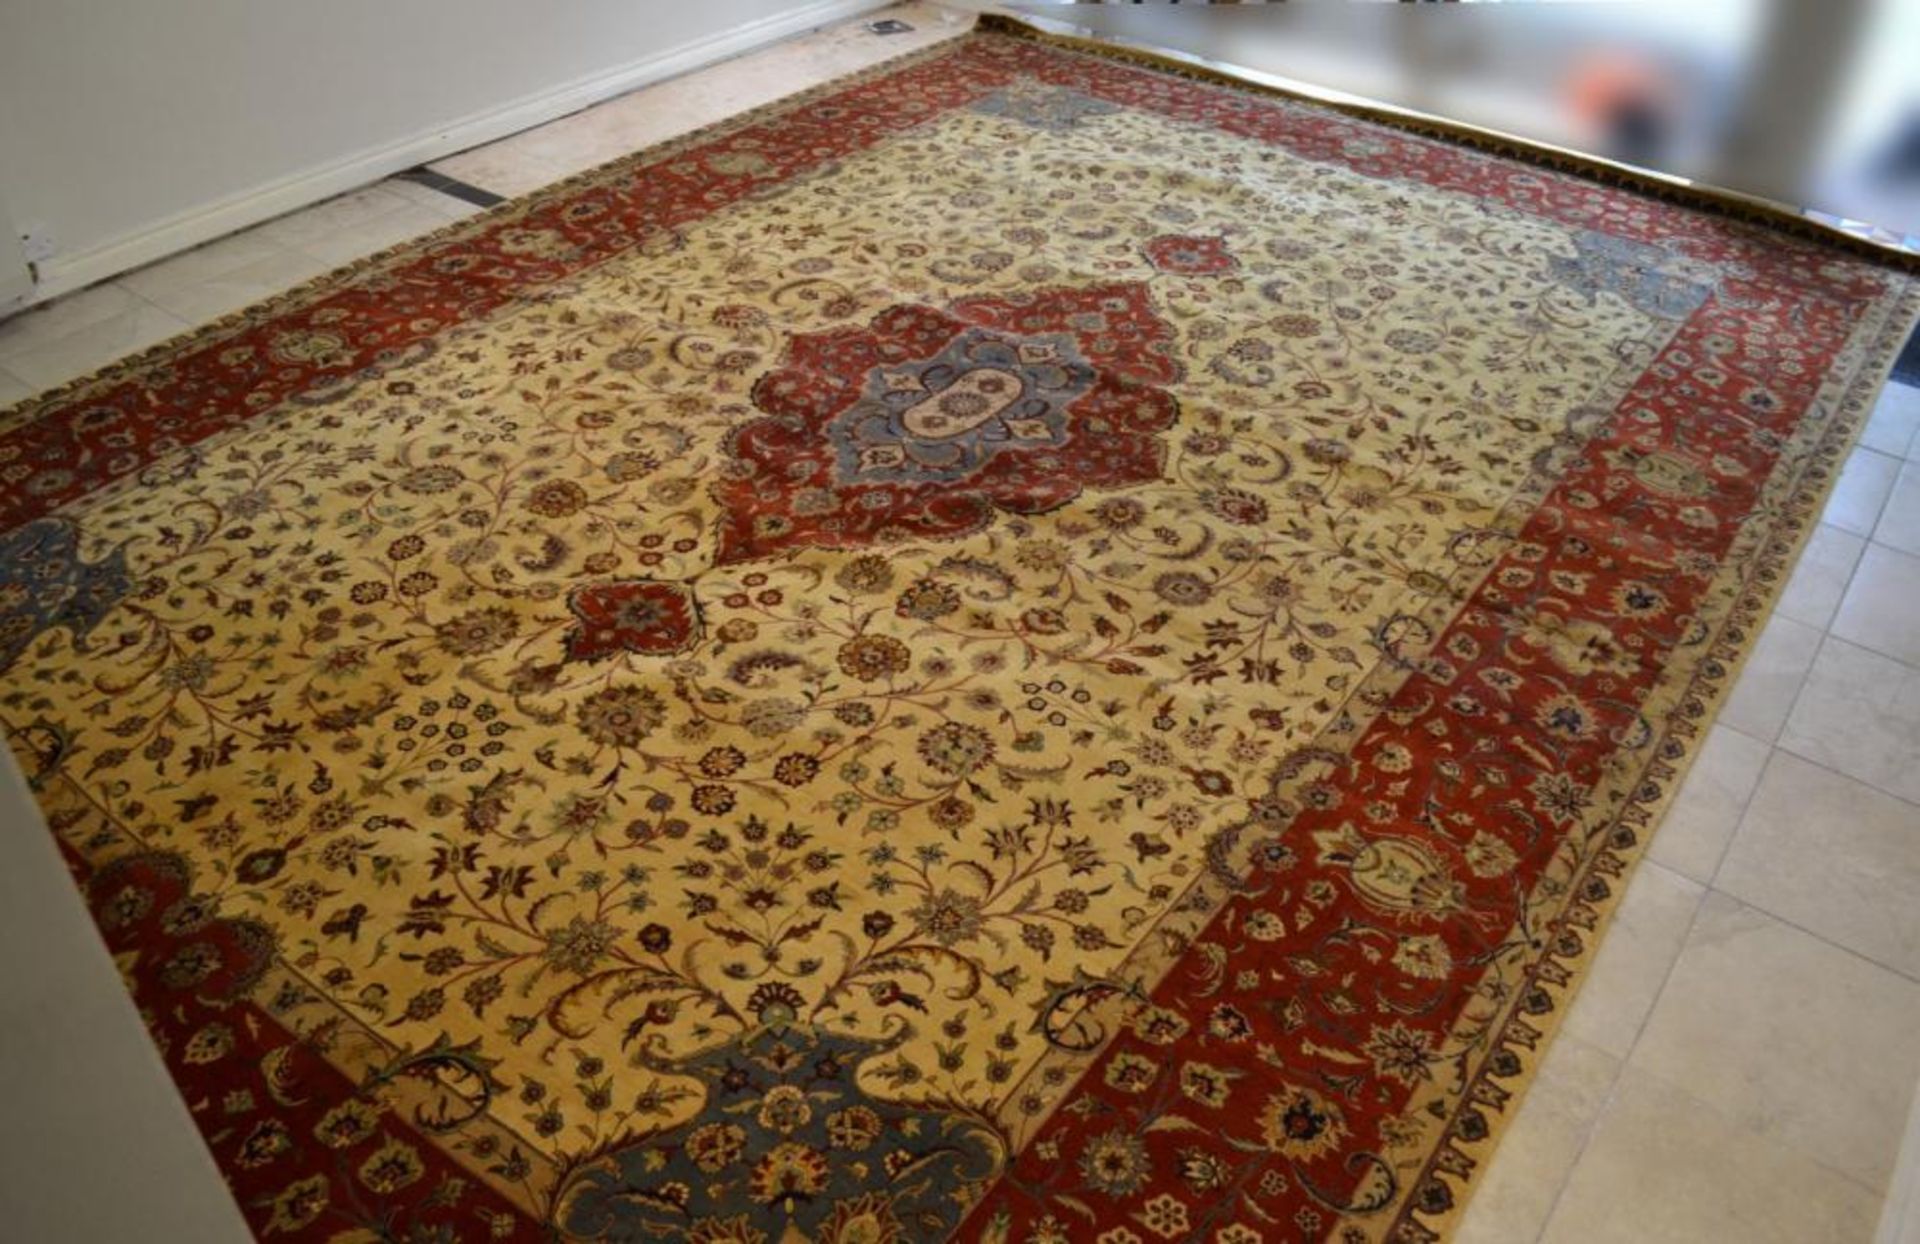 1 x Very Fine Top Quality Pakistan Tabriz Design Carpet - 320 Knot Count - Dimensions: 546x376cm - N - Image 29 of 31